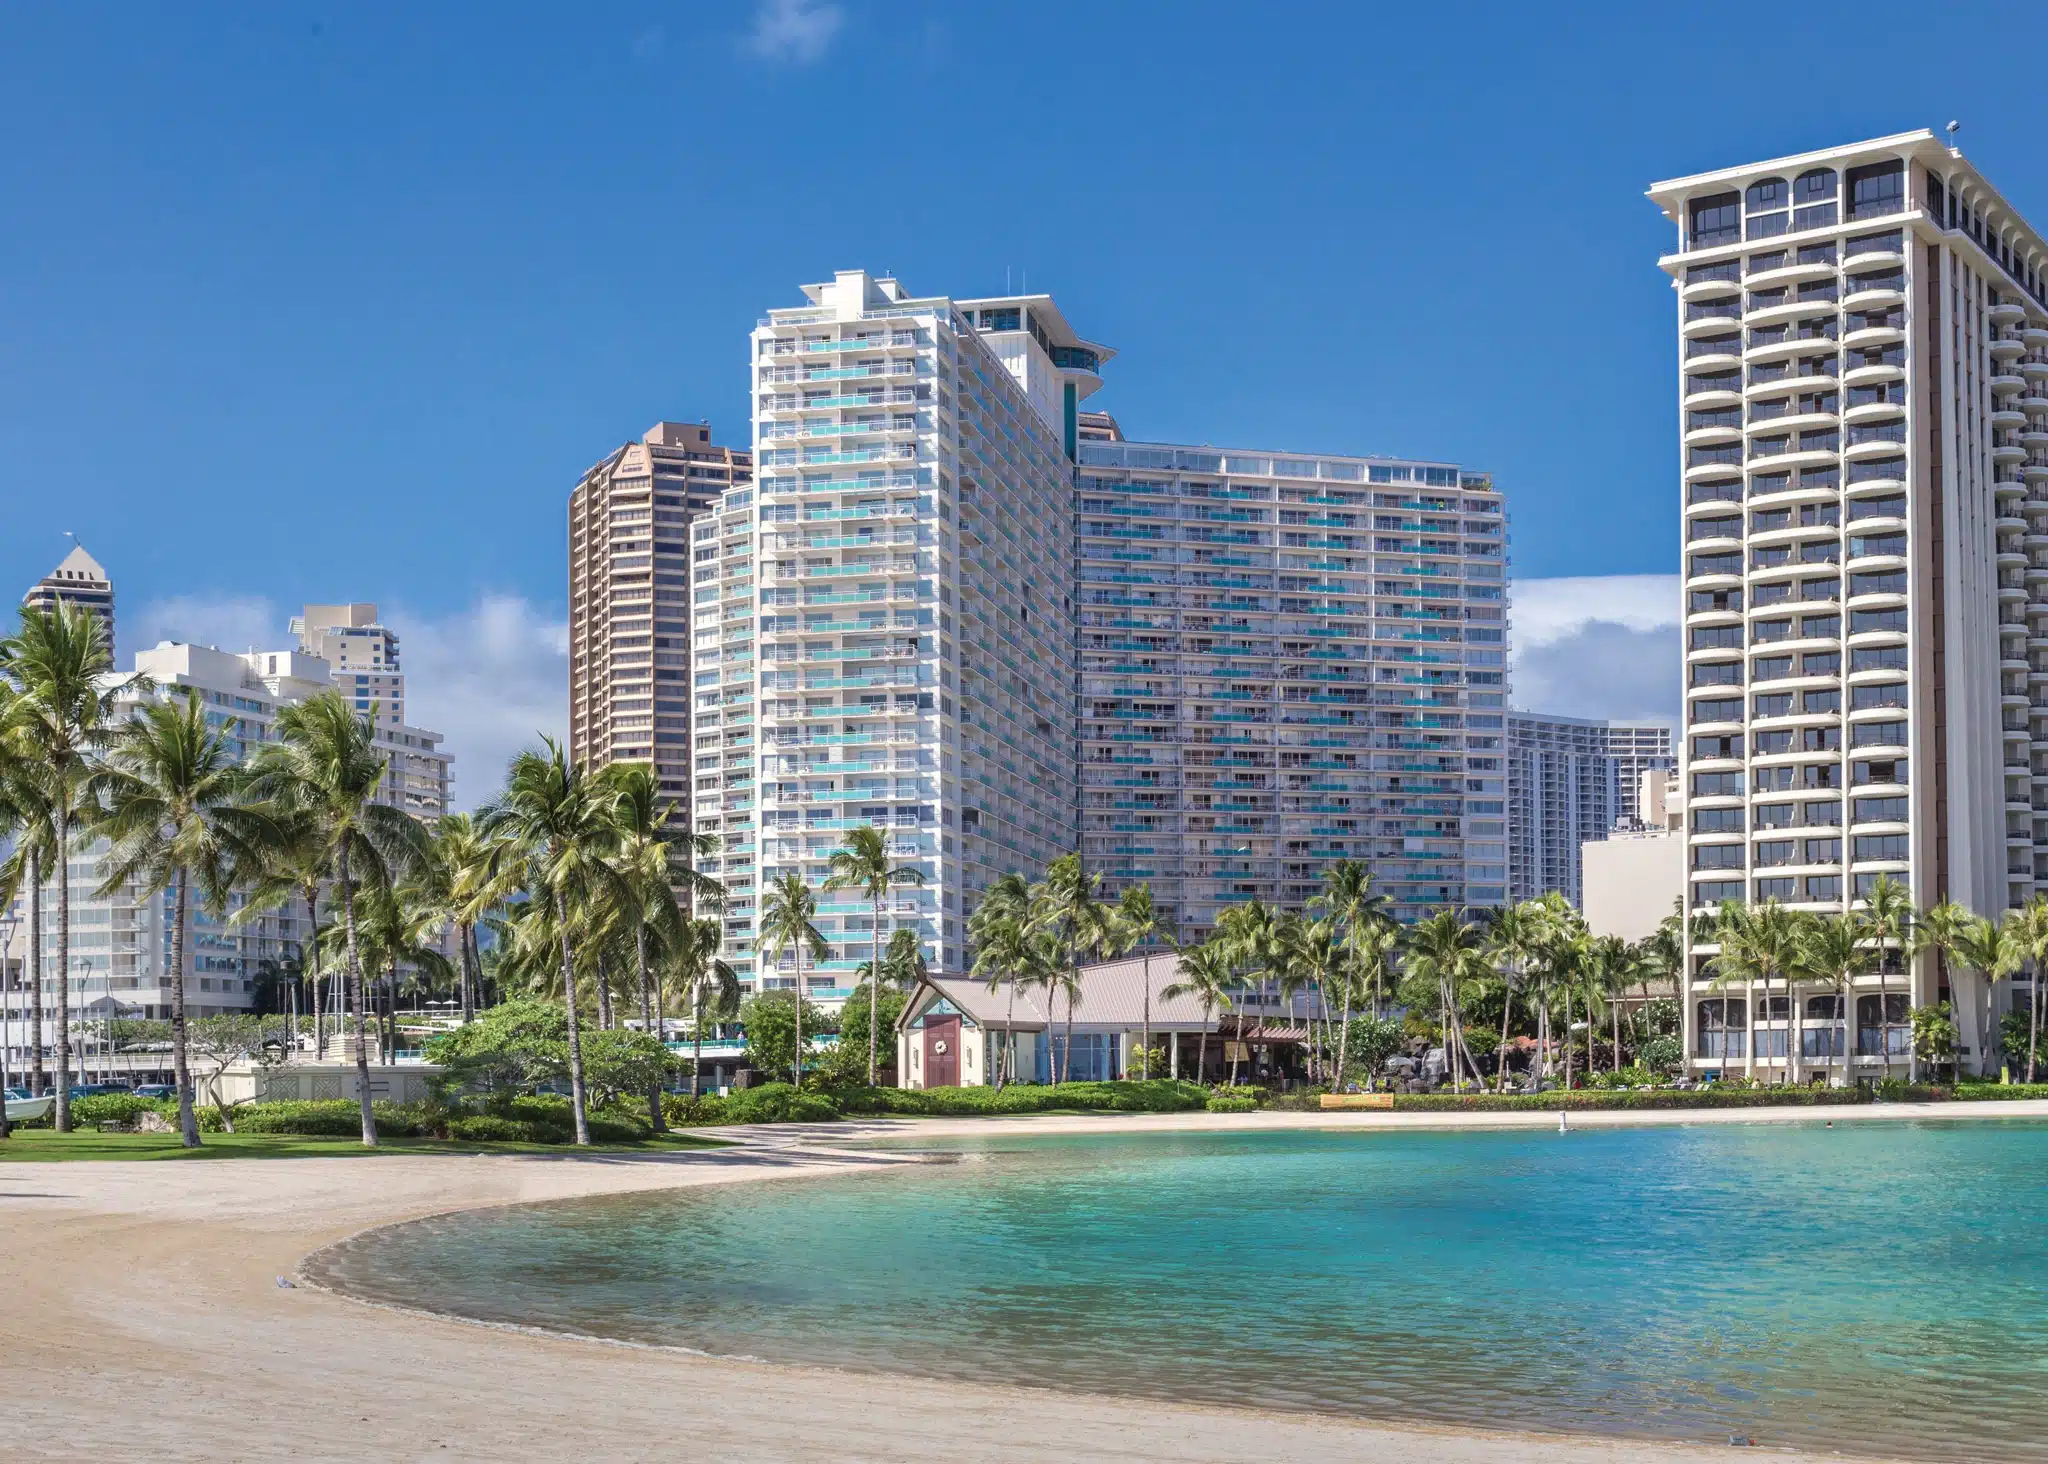 Waikiki Marina Resort at the Ilikai is a Hotel located in the city of Honolulu on Oahu, Hawaii